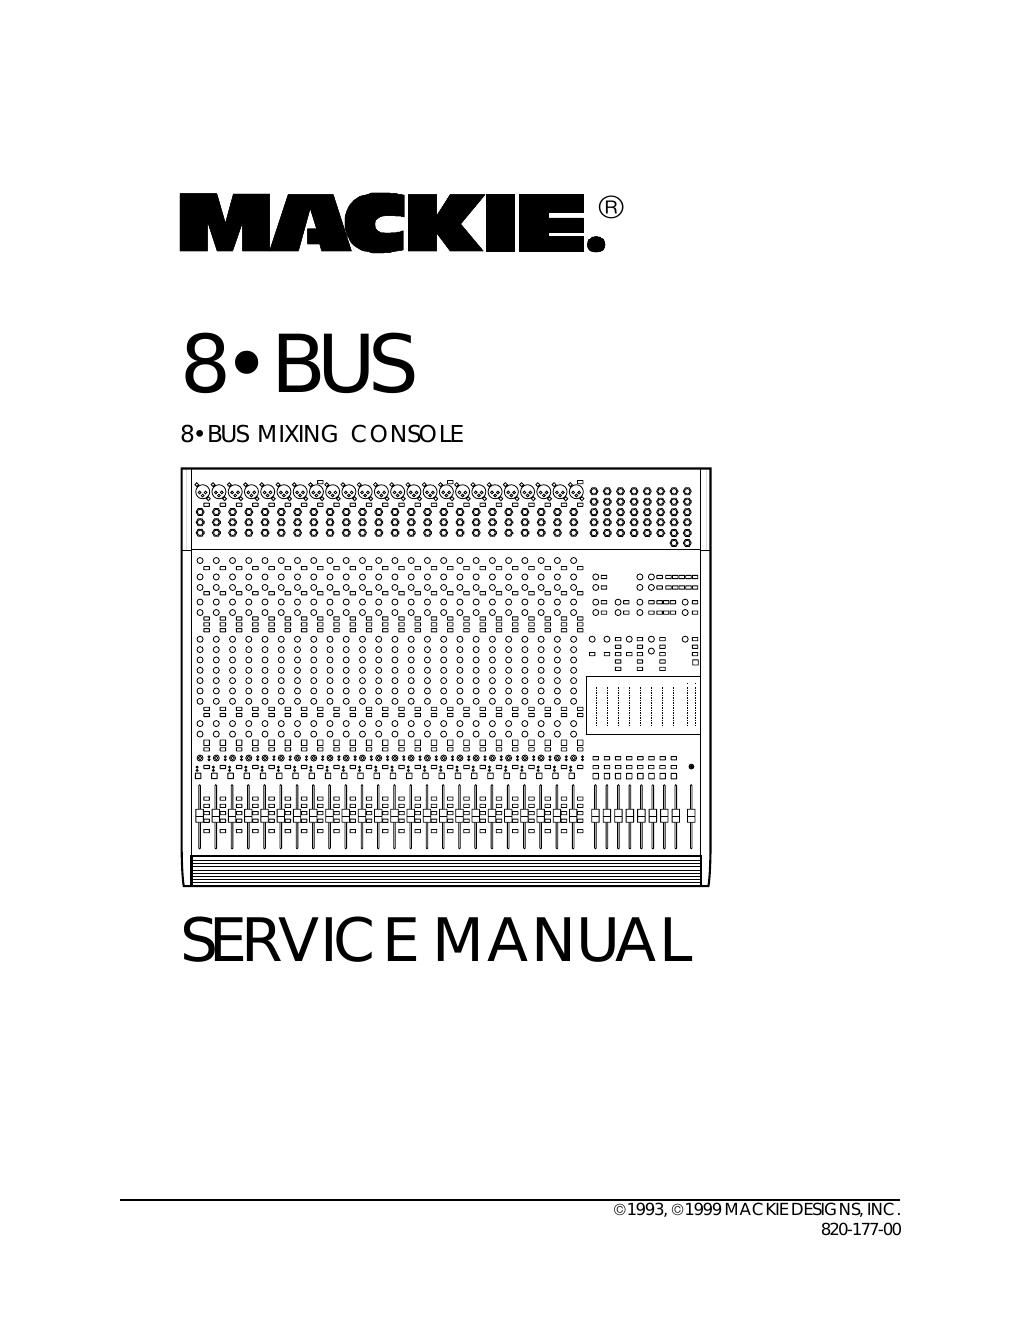 Mackie 8bus Service Manual